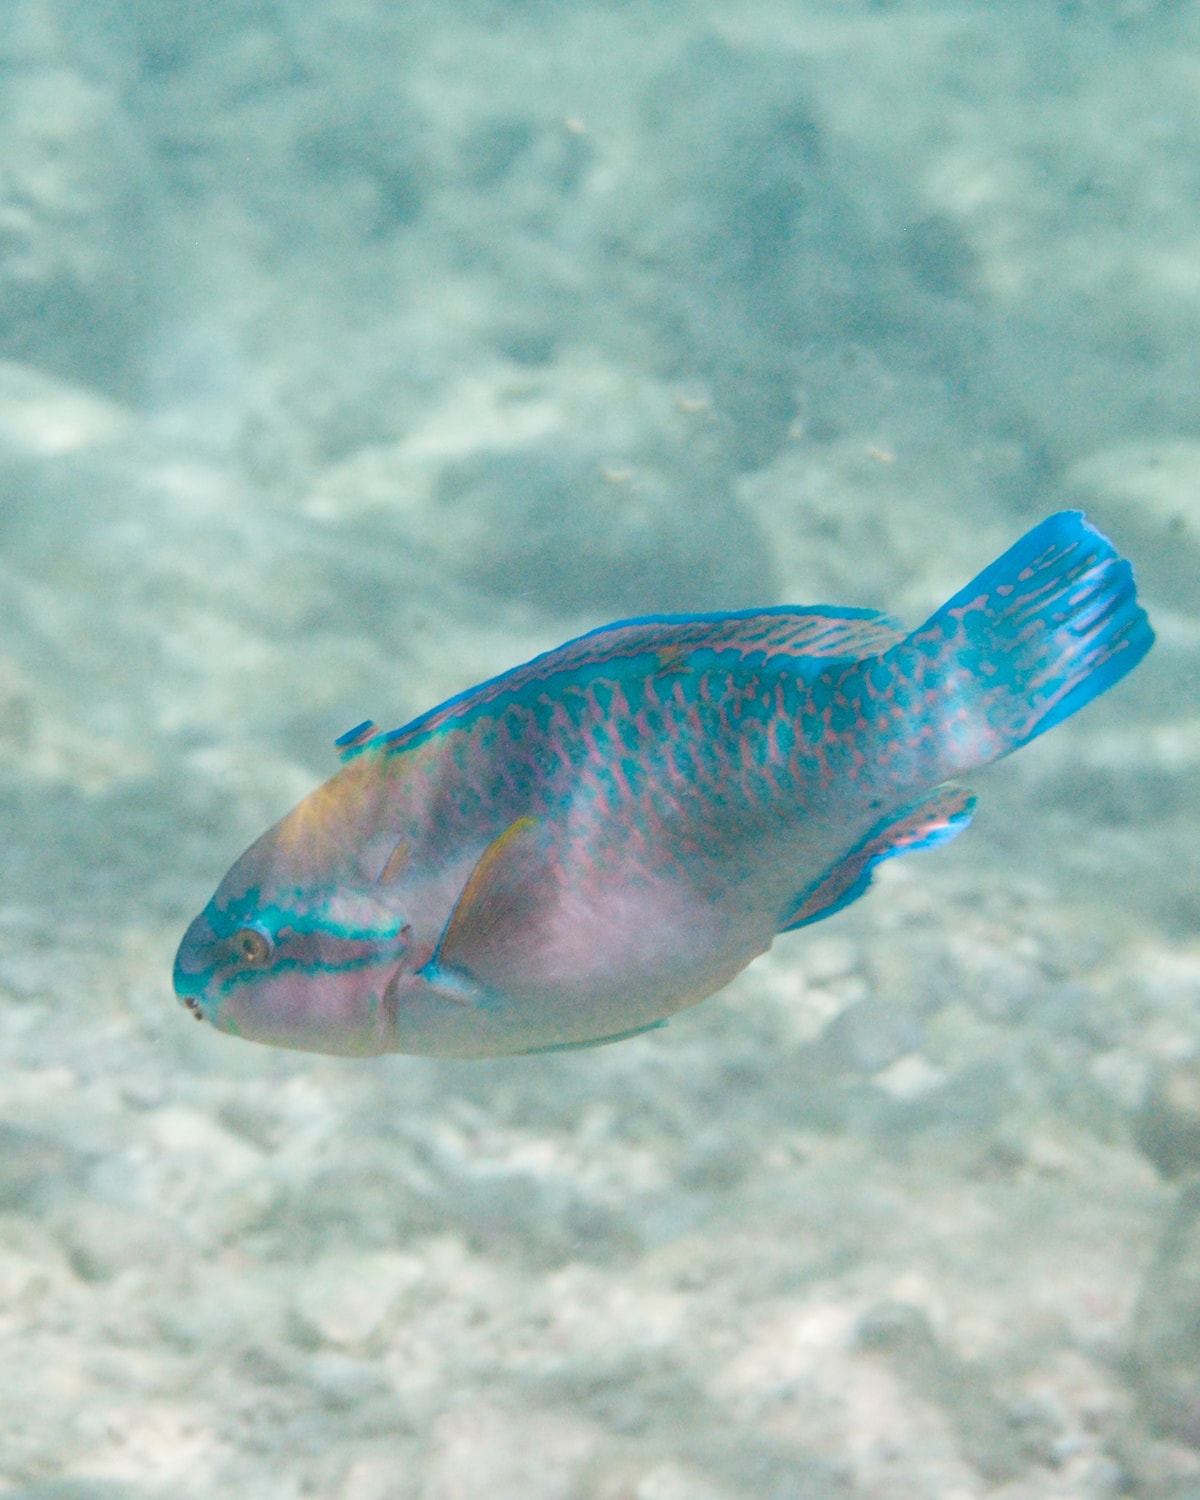 Queen Parrotfish (Scarus vetula) in the Caribbean Sea